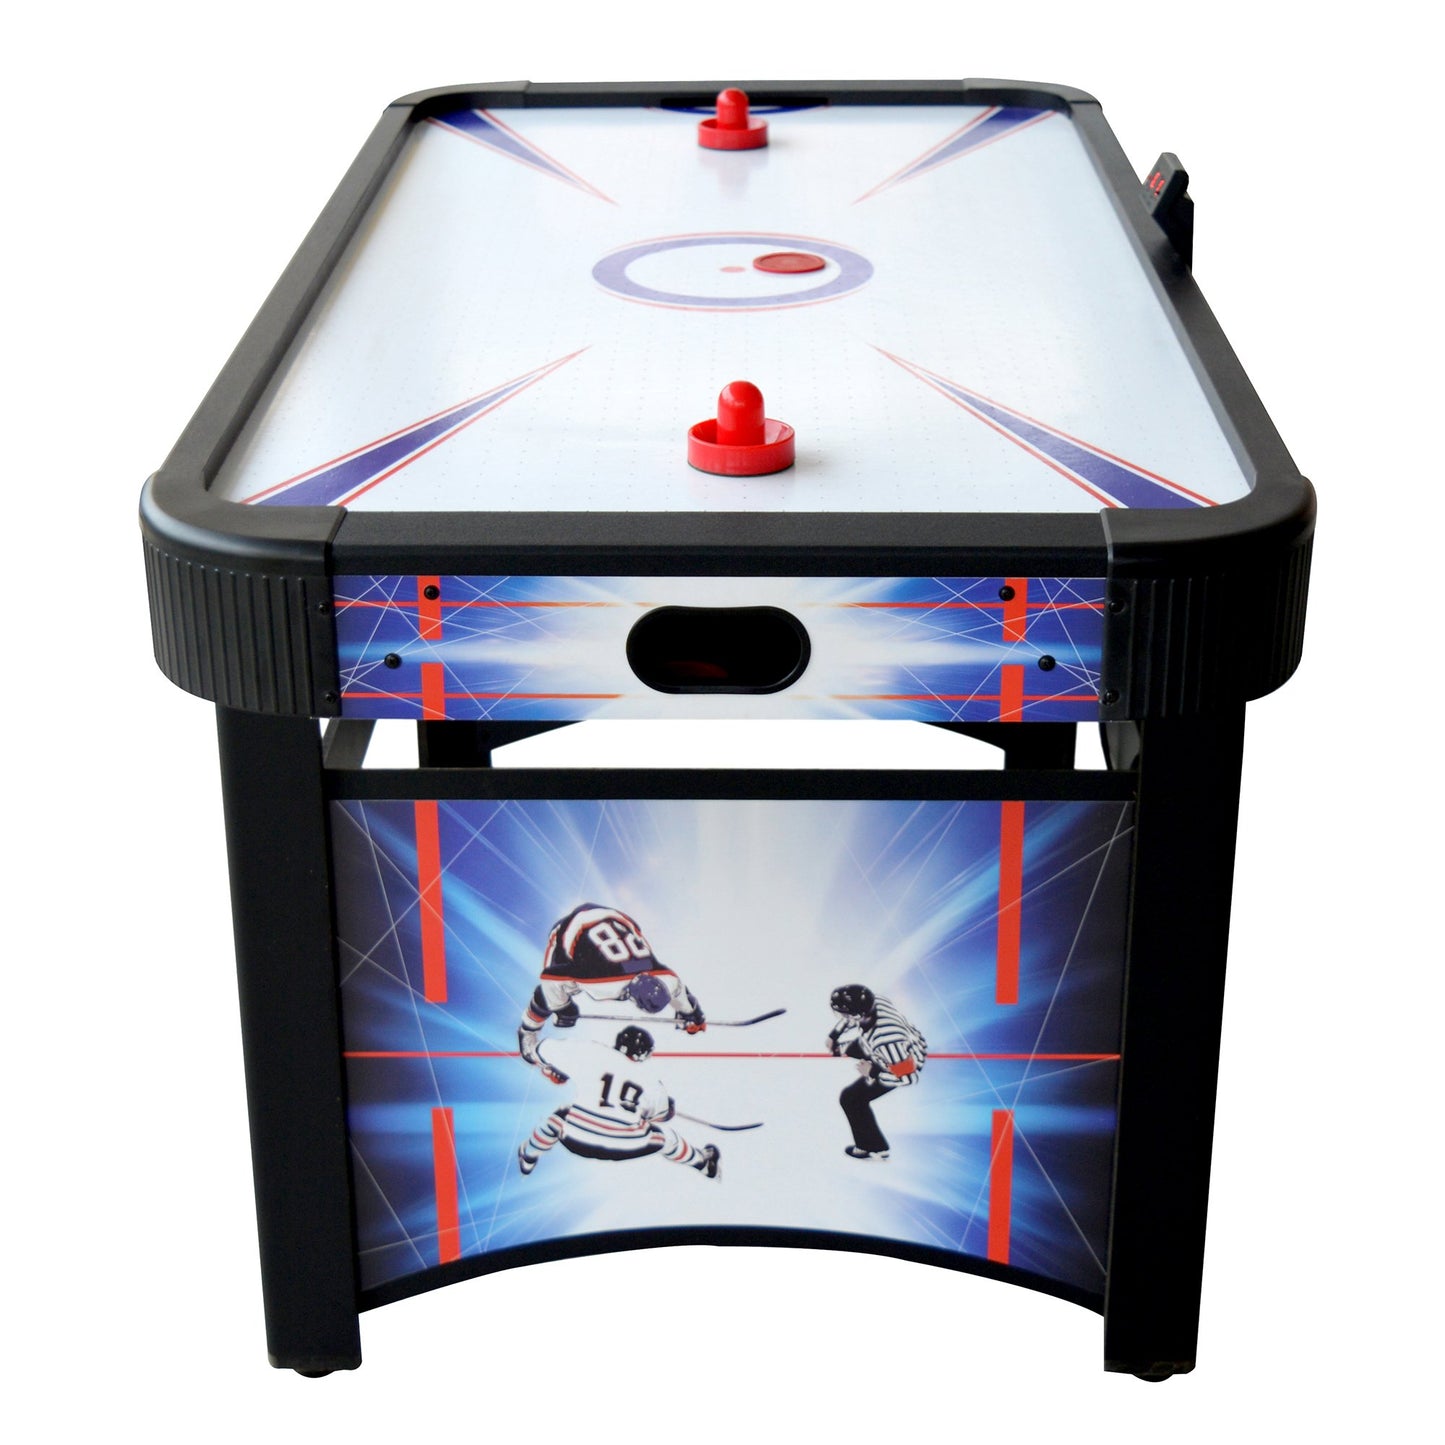 Hathaway Patriot 5ft Air Hockey Table - Gaming Blaze